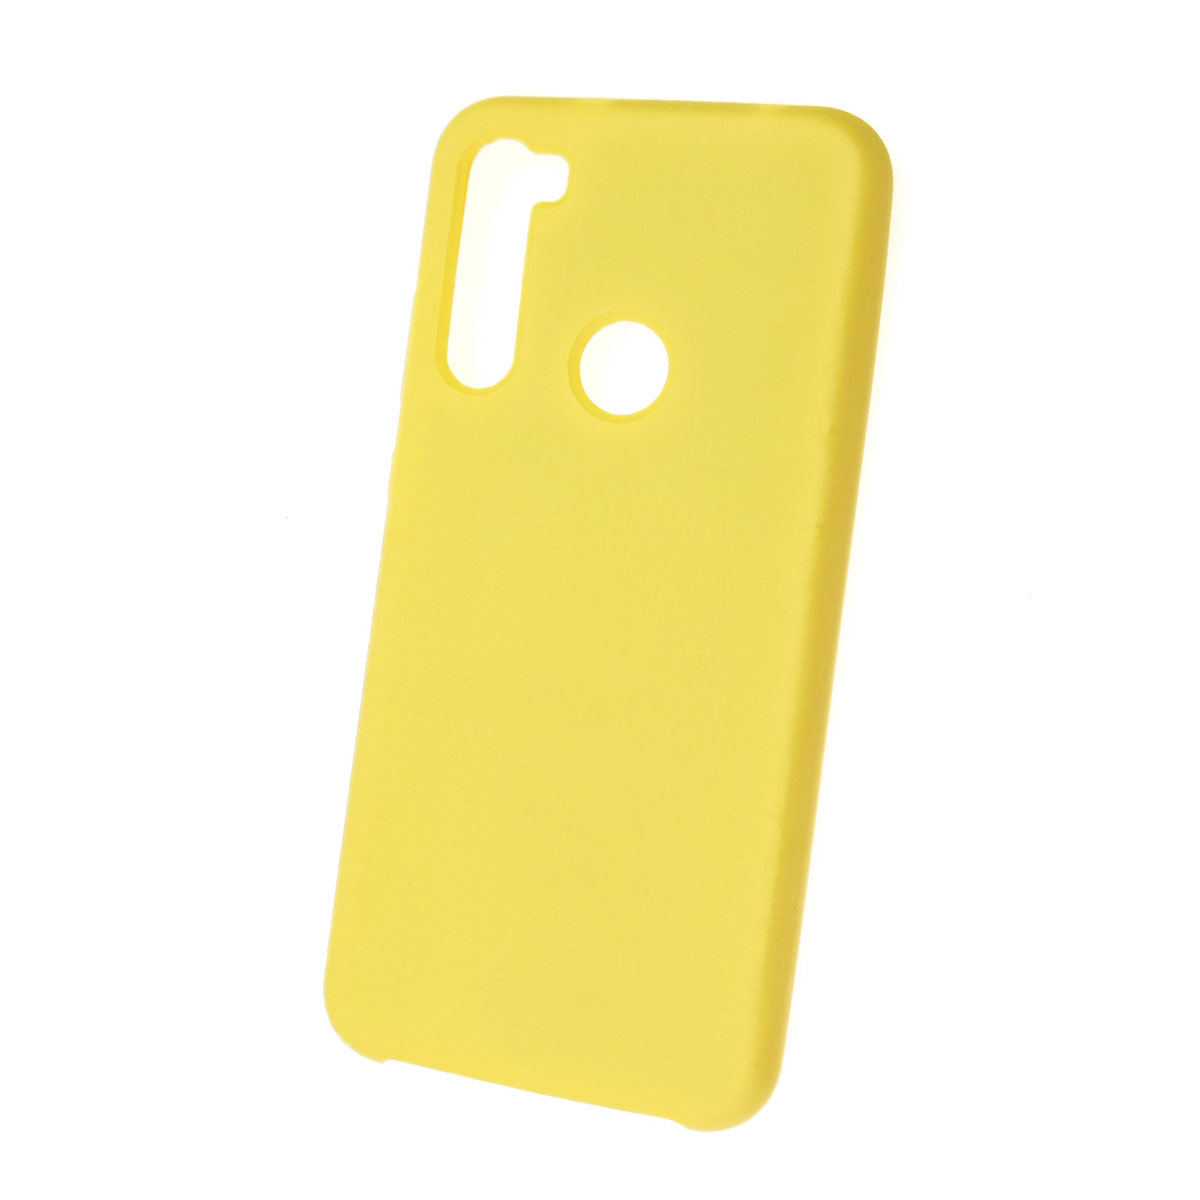 Чехол накладка Silicon Cover для XIAOMI Redmi Note 8T, силикон, бархат, цвет желтый.